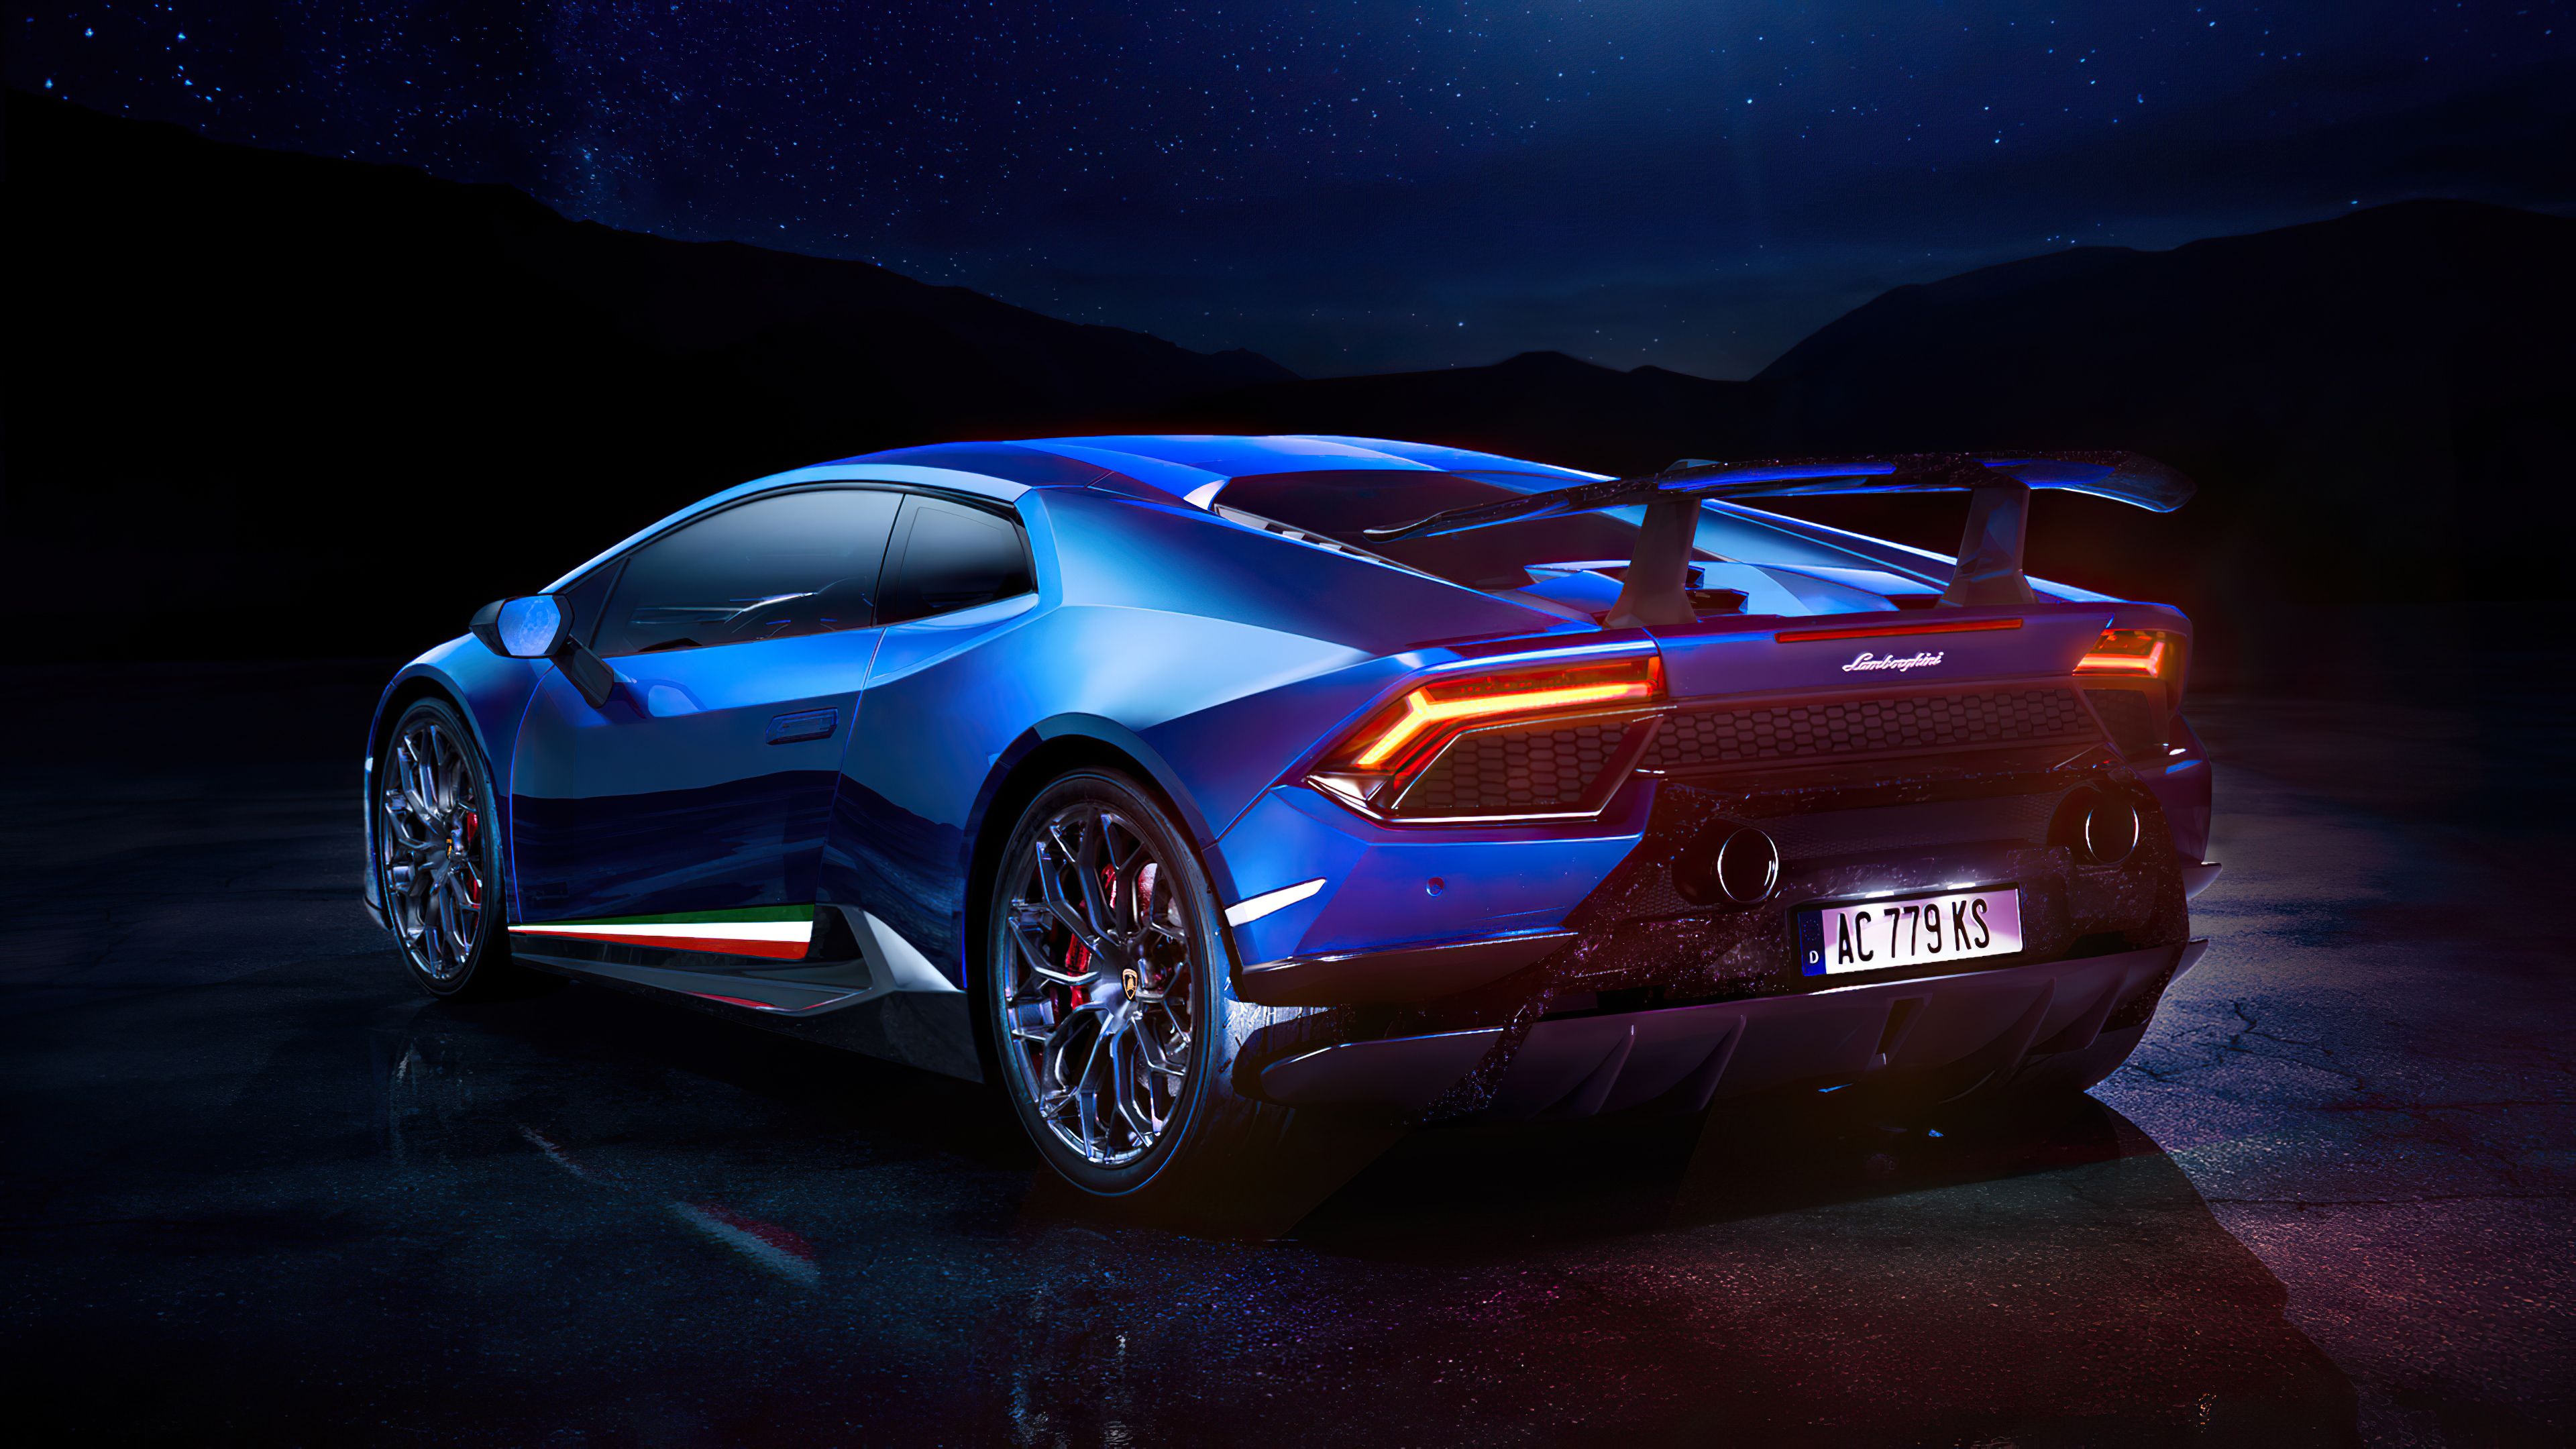 Blue Lamborghini Huracan 4k Rear, HD Cars, 4k Wallpaper, Image, Background, Photo and Picture